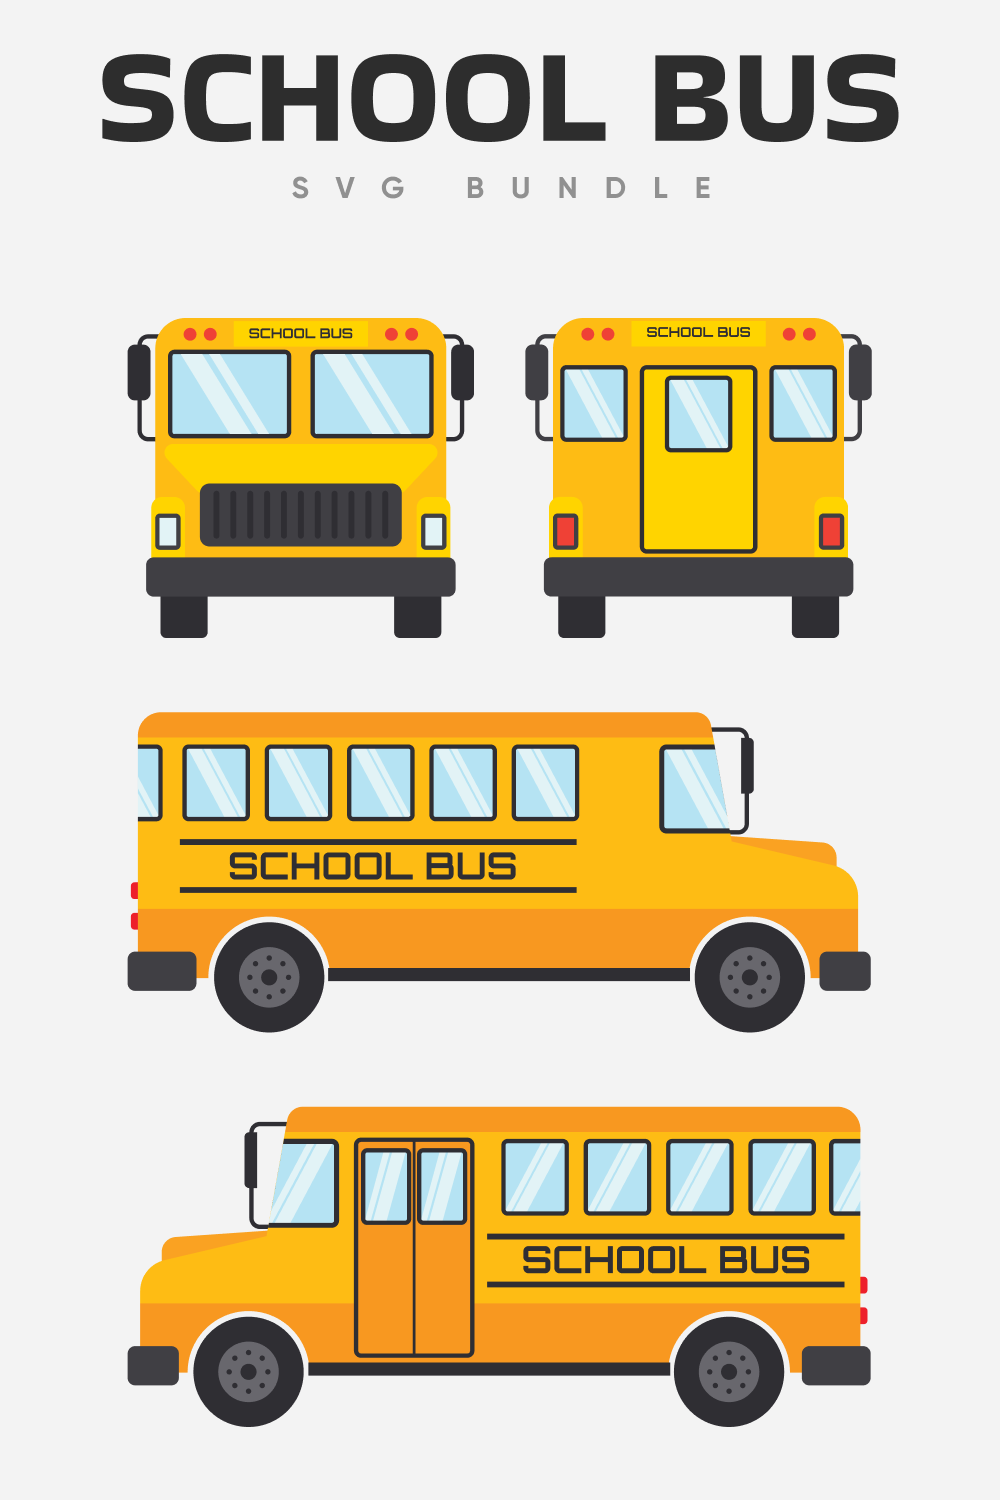 School bus SVG bundle.